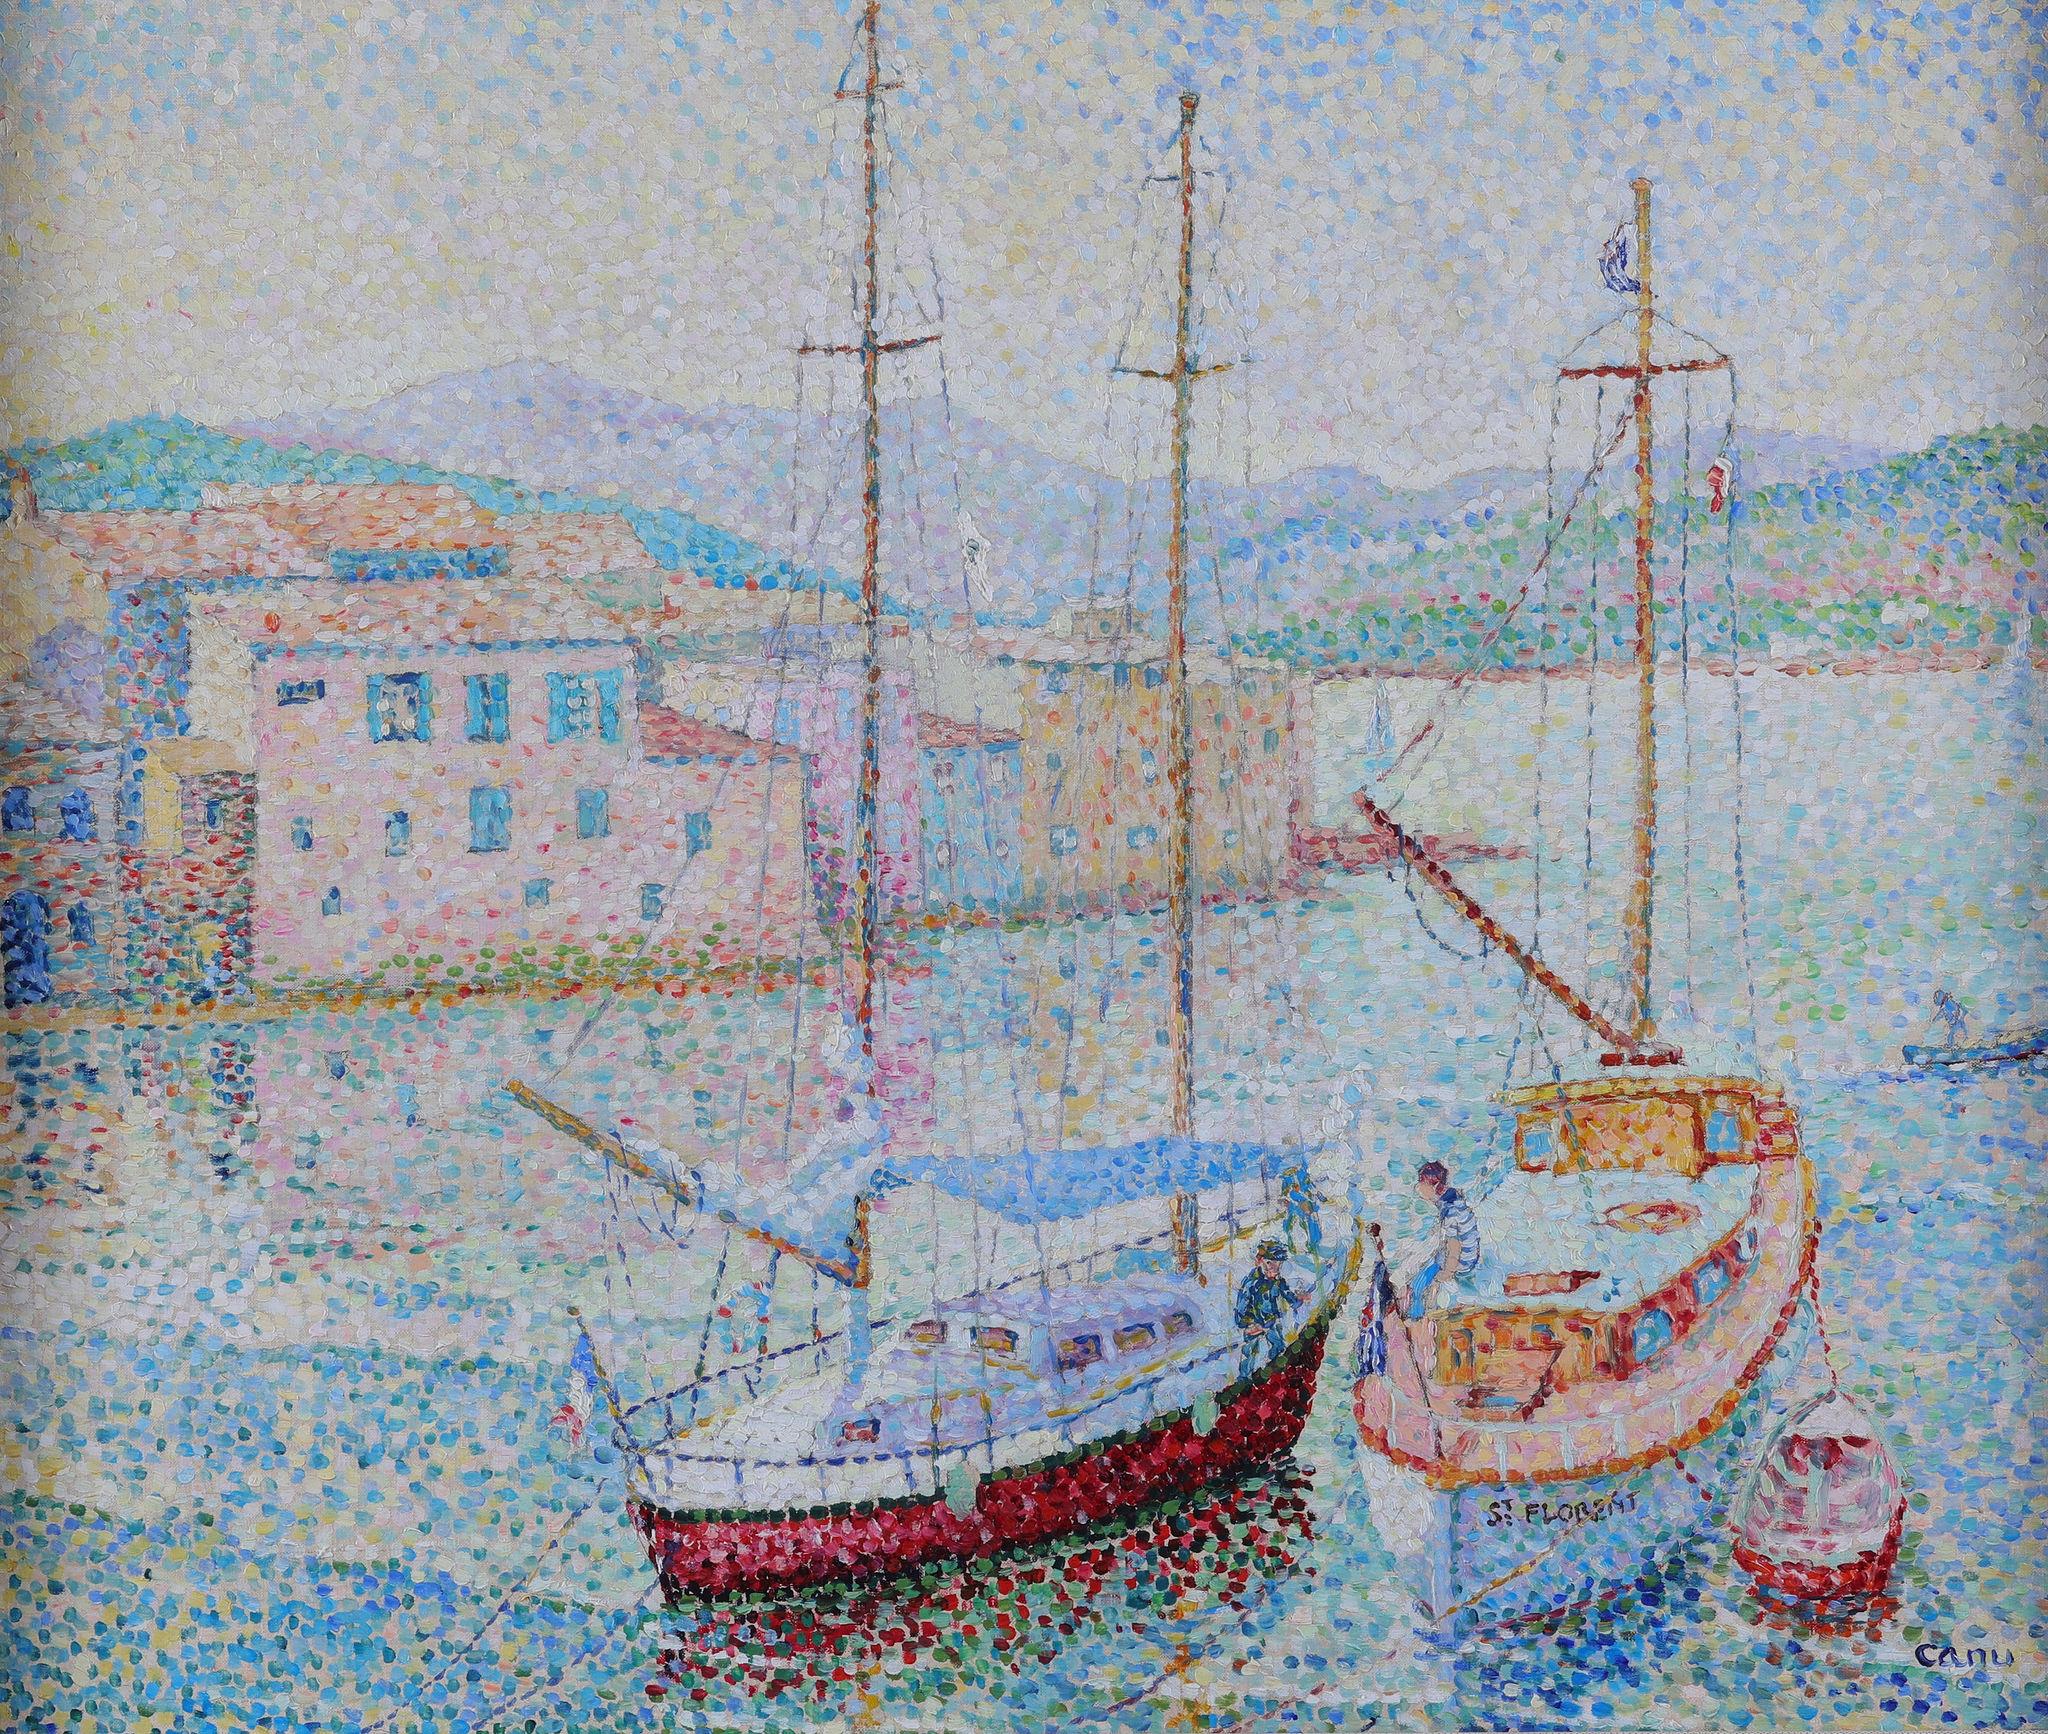 'Barques a St. Florent Corse' . Boats at Saint Florent, Corsica. Pointillism - Pointillist Painting by Yvonne Canu